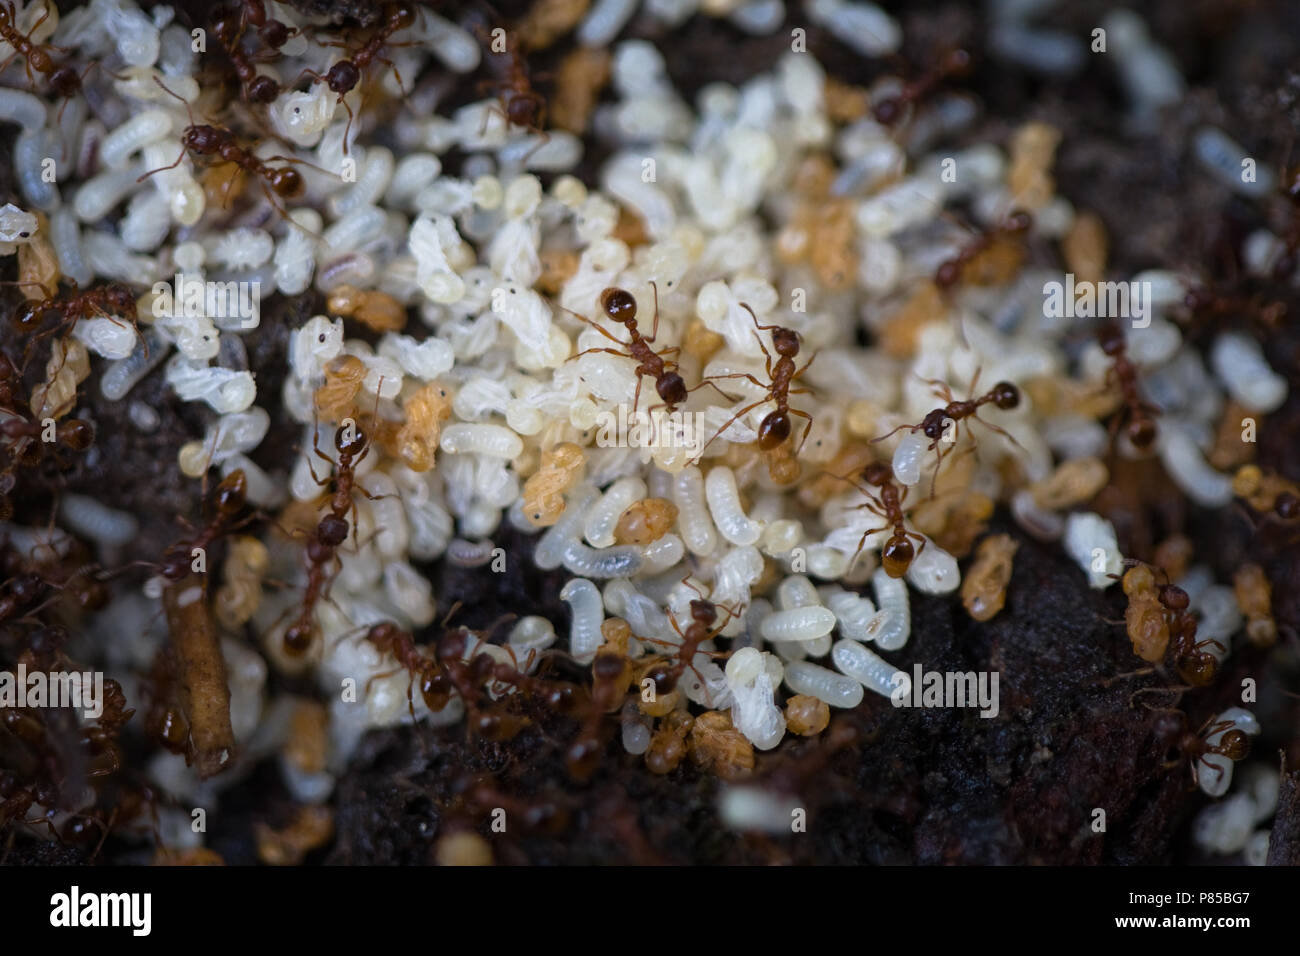 Mierennest met eieren en volwassen dieren, Ant nest with eggs and imagos Stock Photo